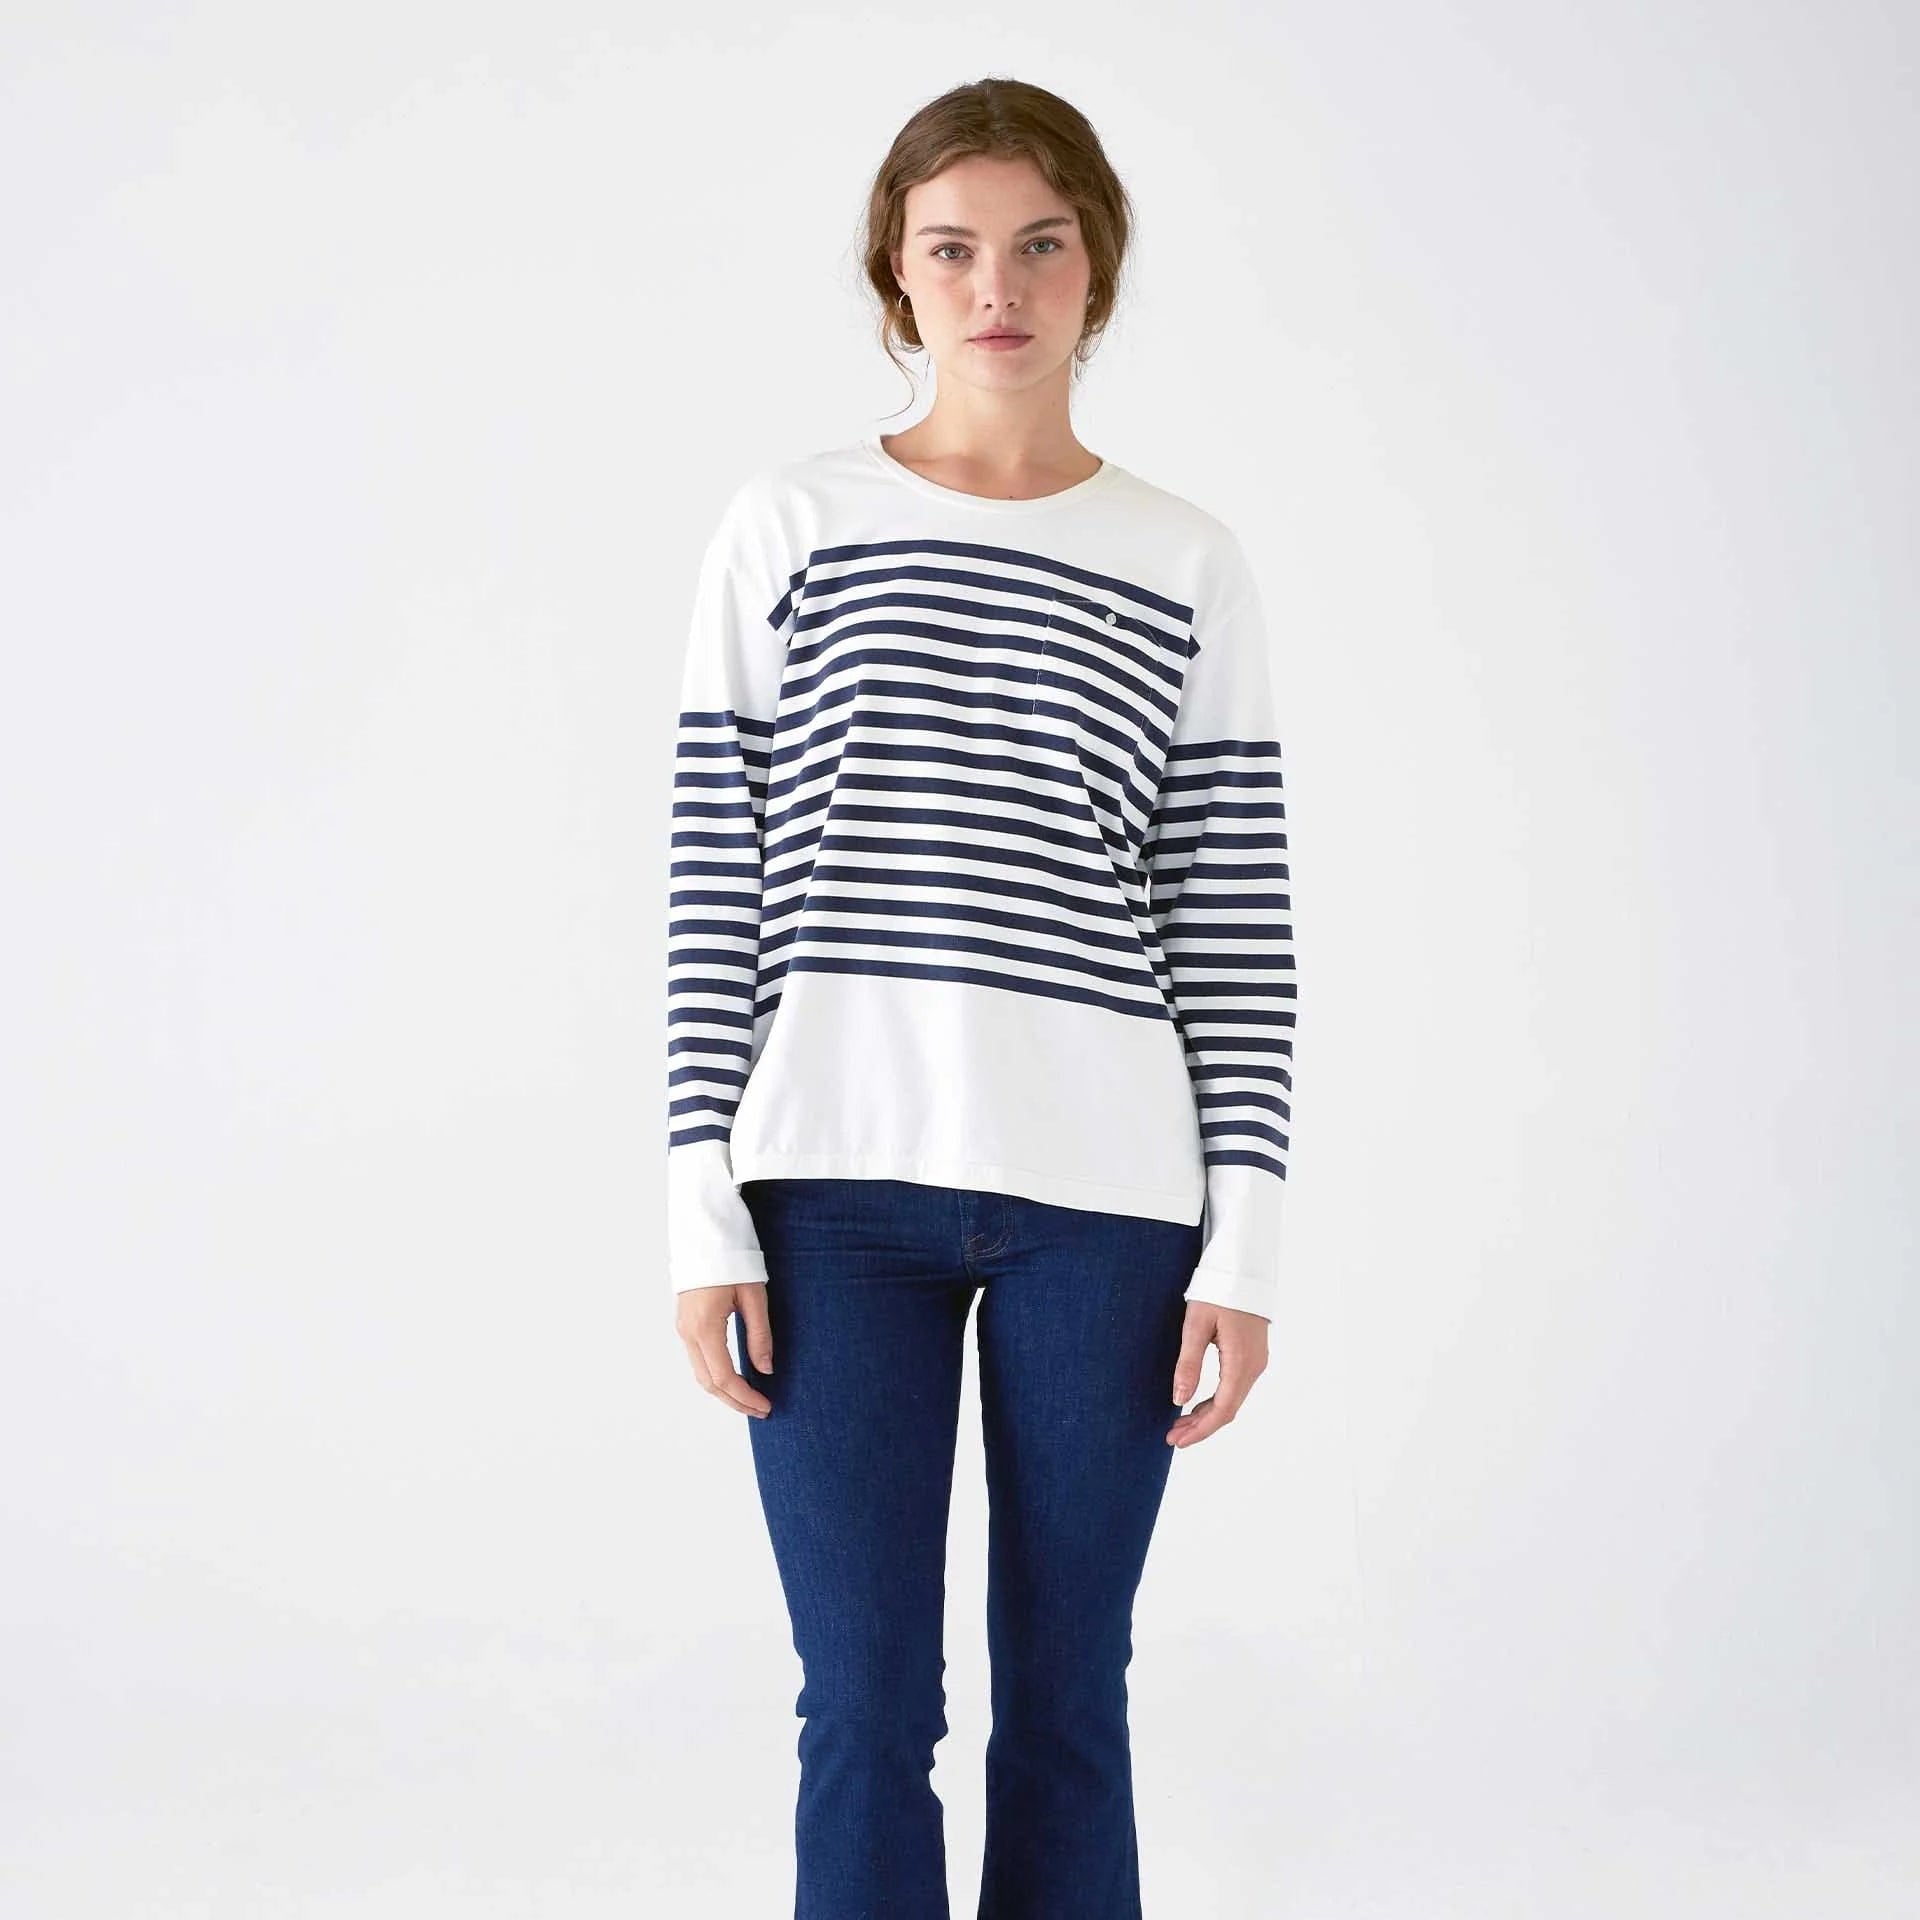 Mersea Women's Shirts & Tops Striped Navy / Small Boater Longsleeve Shirt